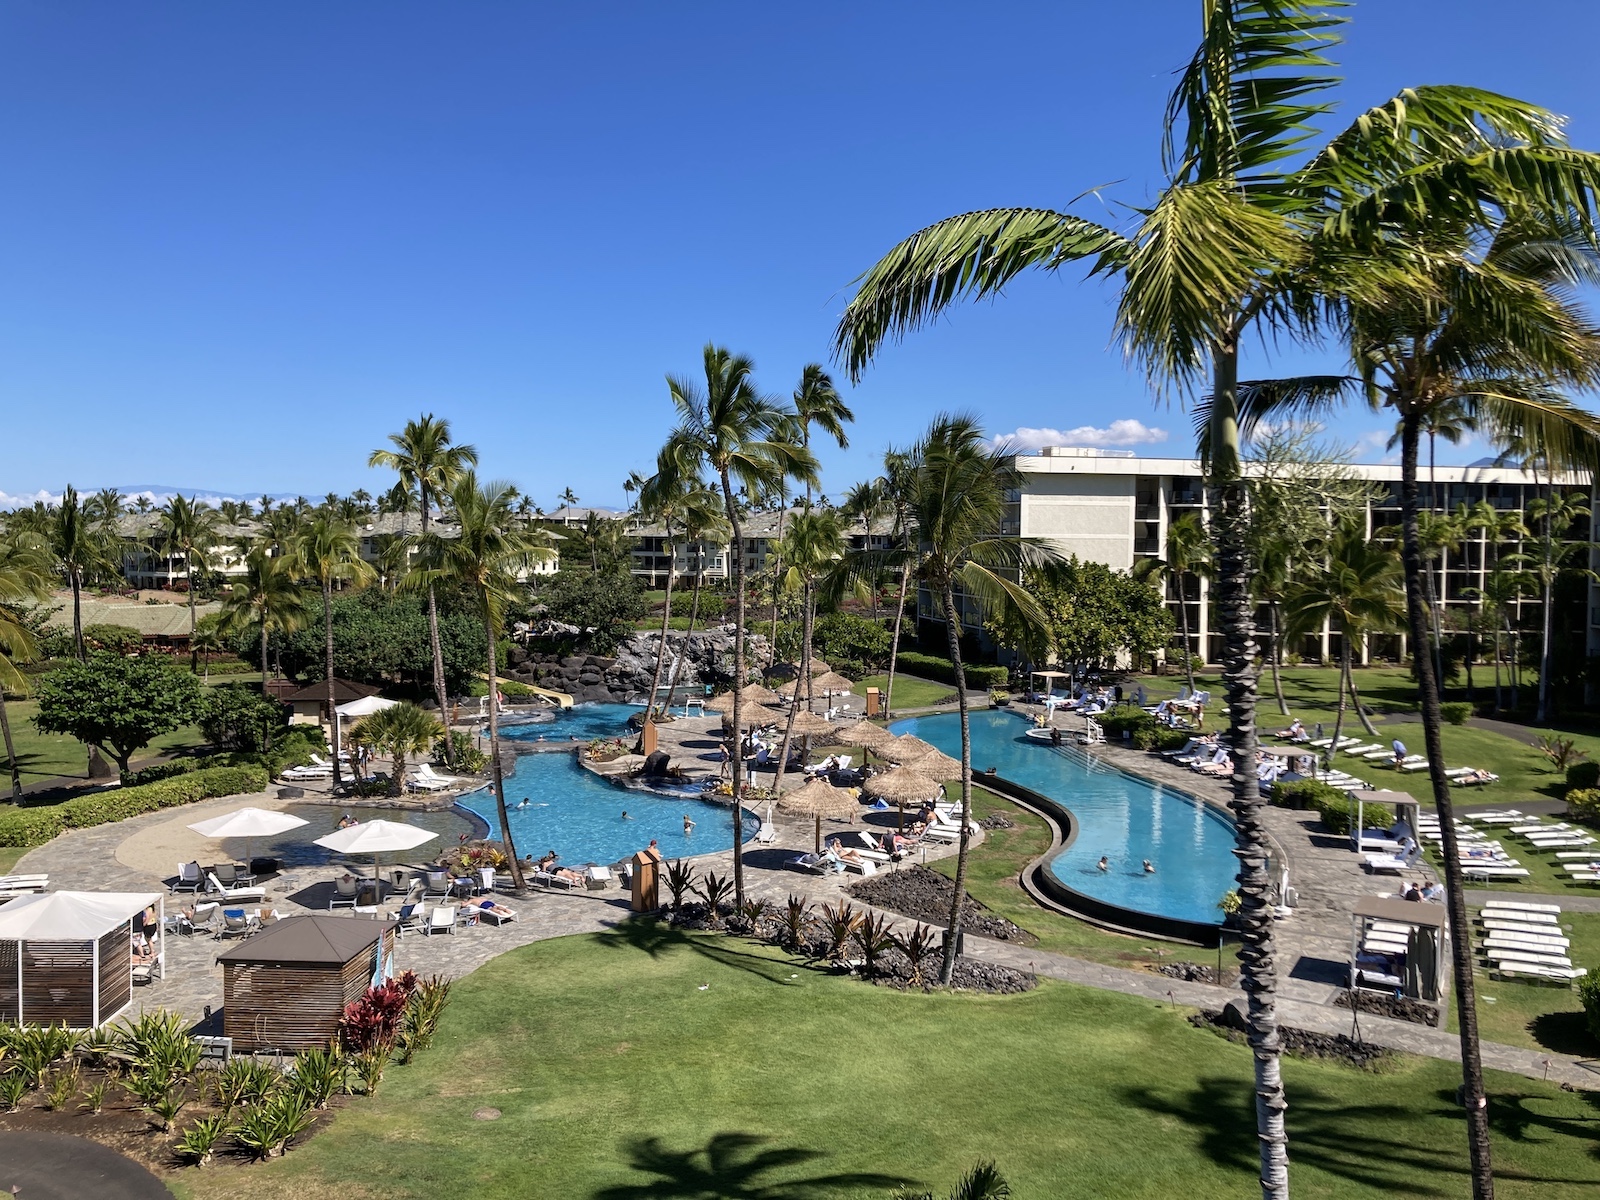 Hotel Review: Waikoloa Beach Marriott Resort & Spa (Big Island of Hawaii)